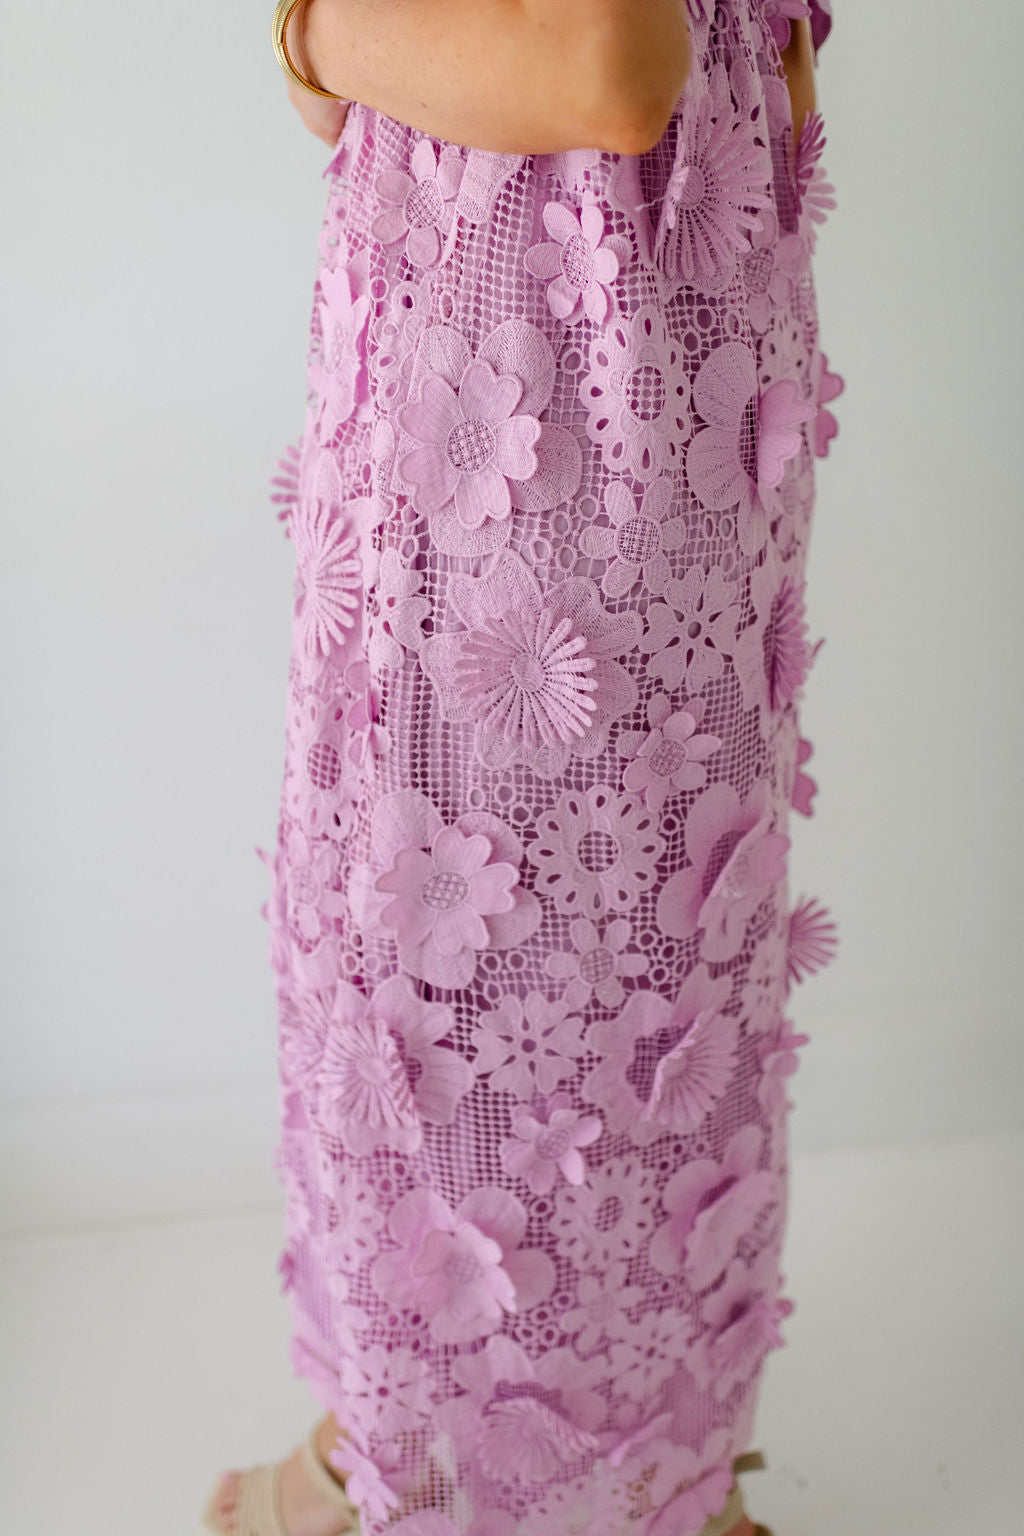 J.Marie Collections Bria Lavender Lace Midi Dress